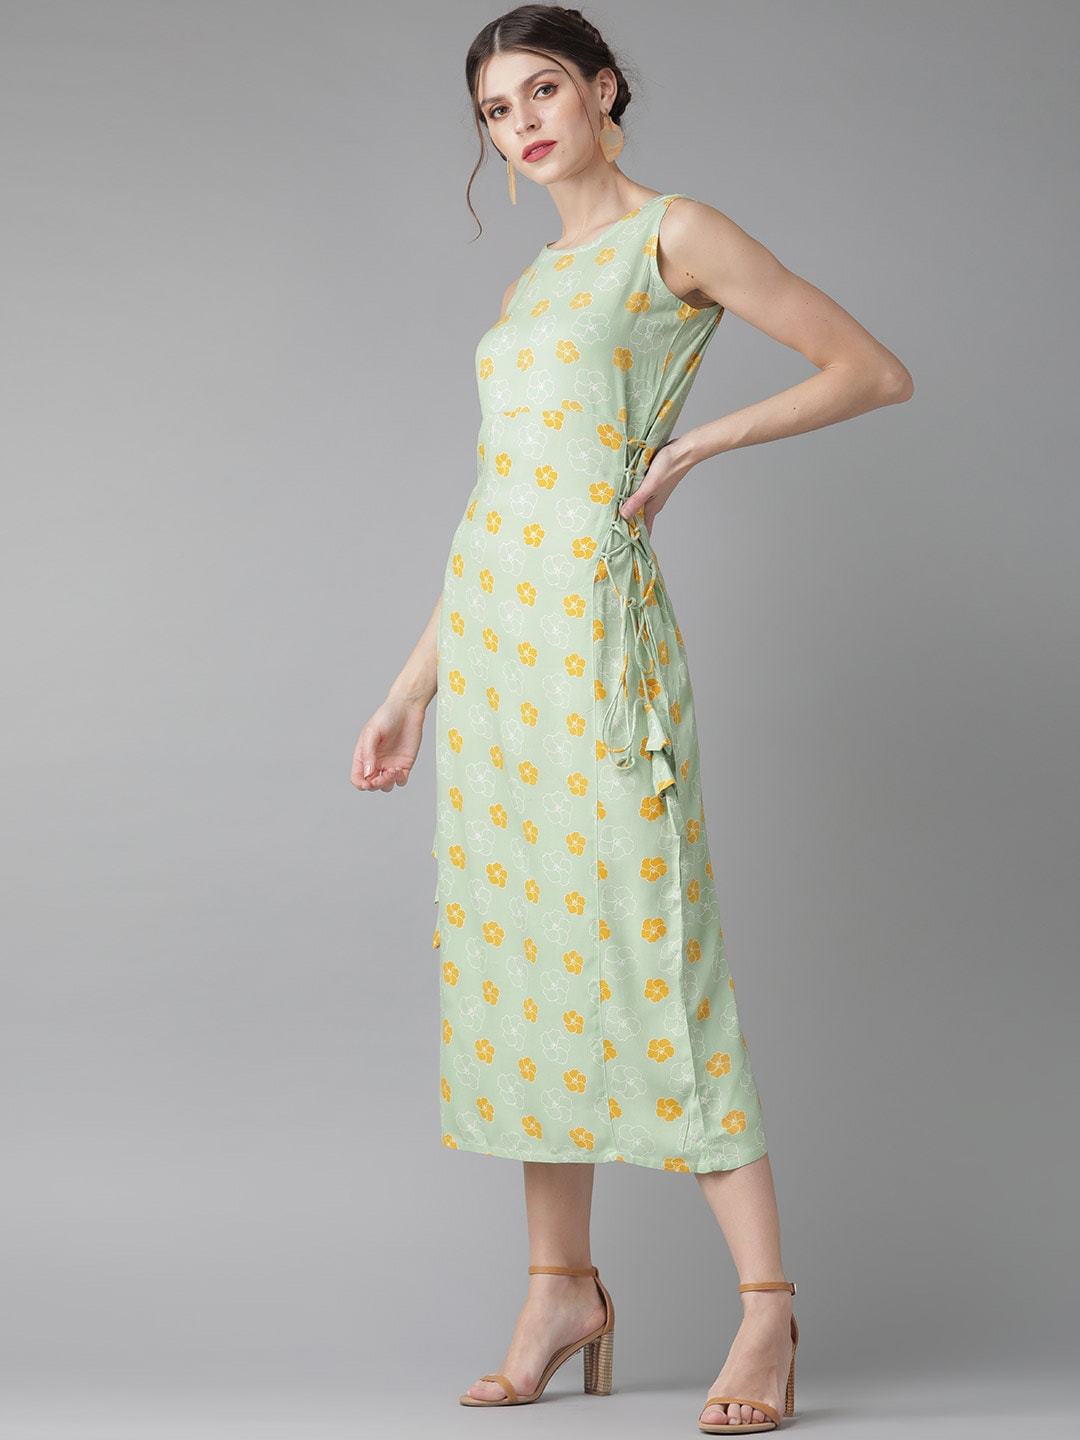 Women's  Green & Mustard Yellow Printed A-Line Dress - AKS